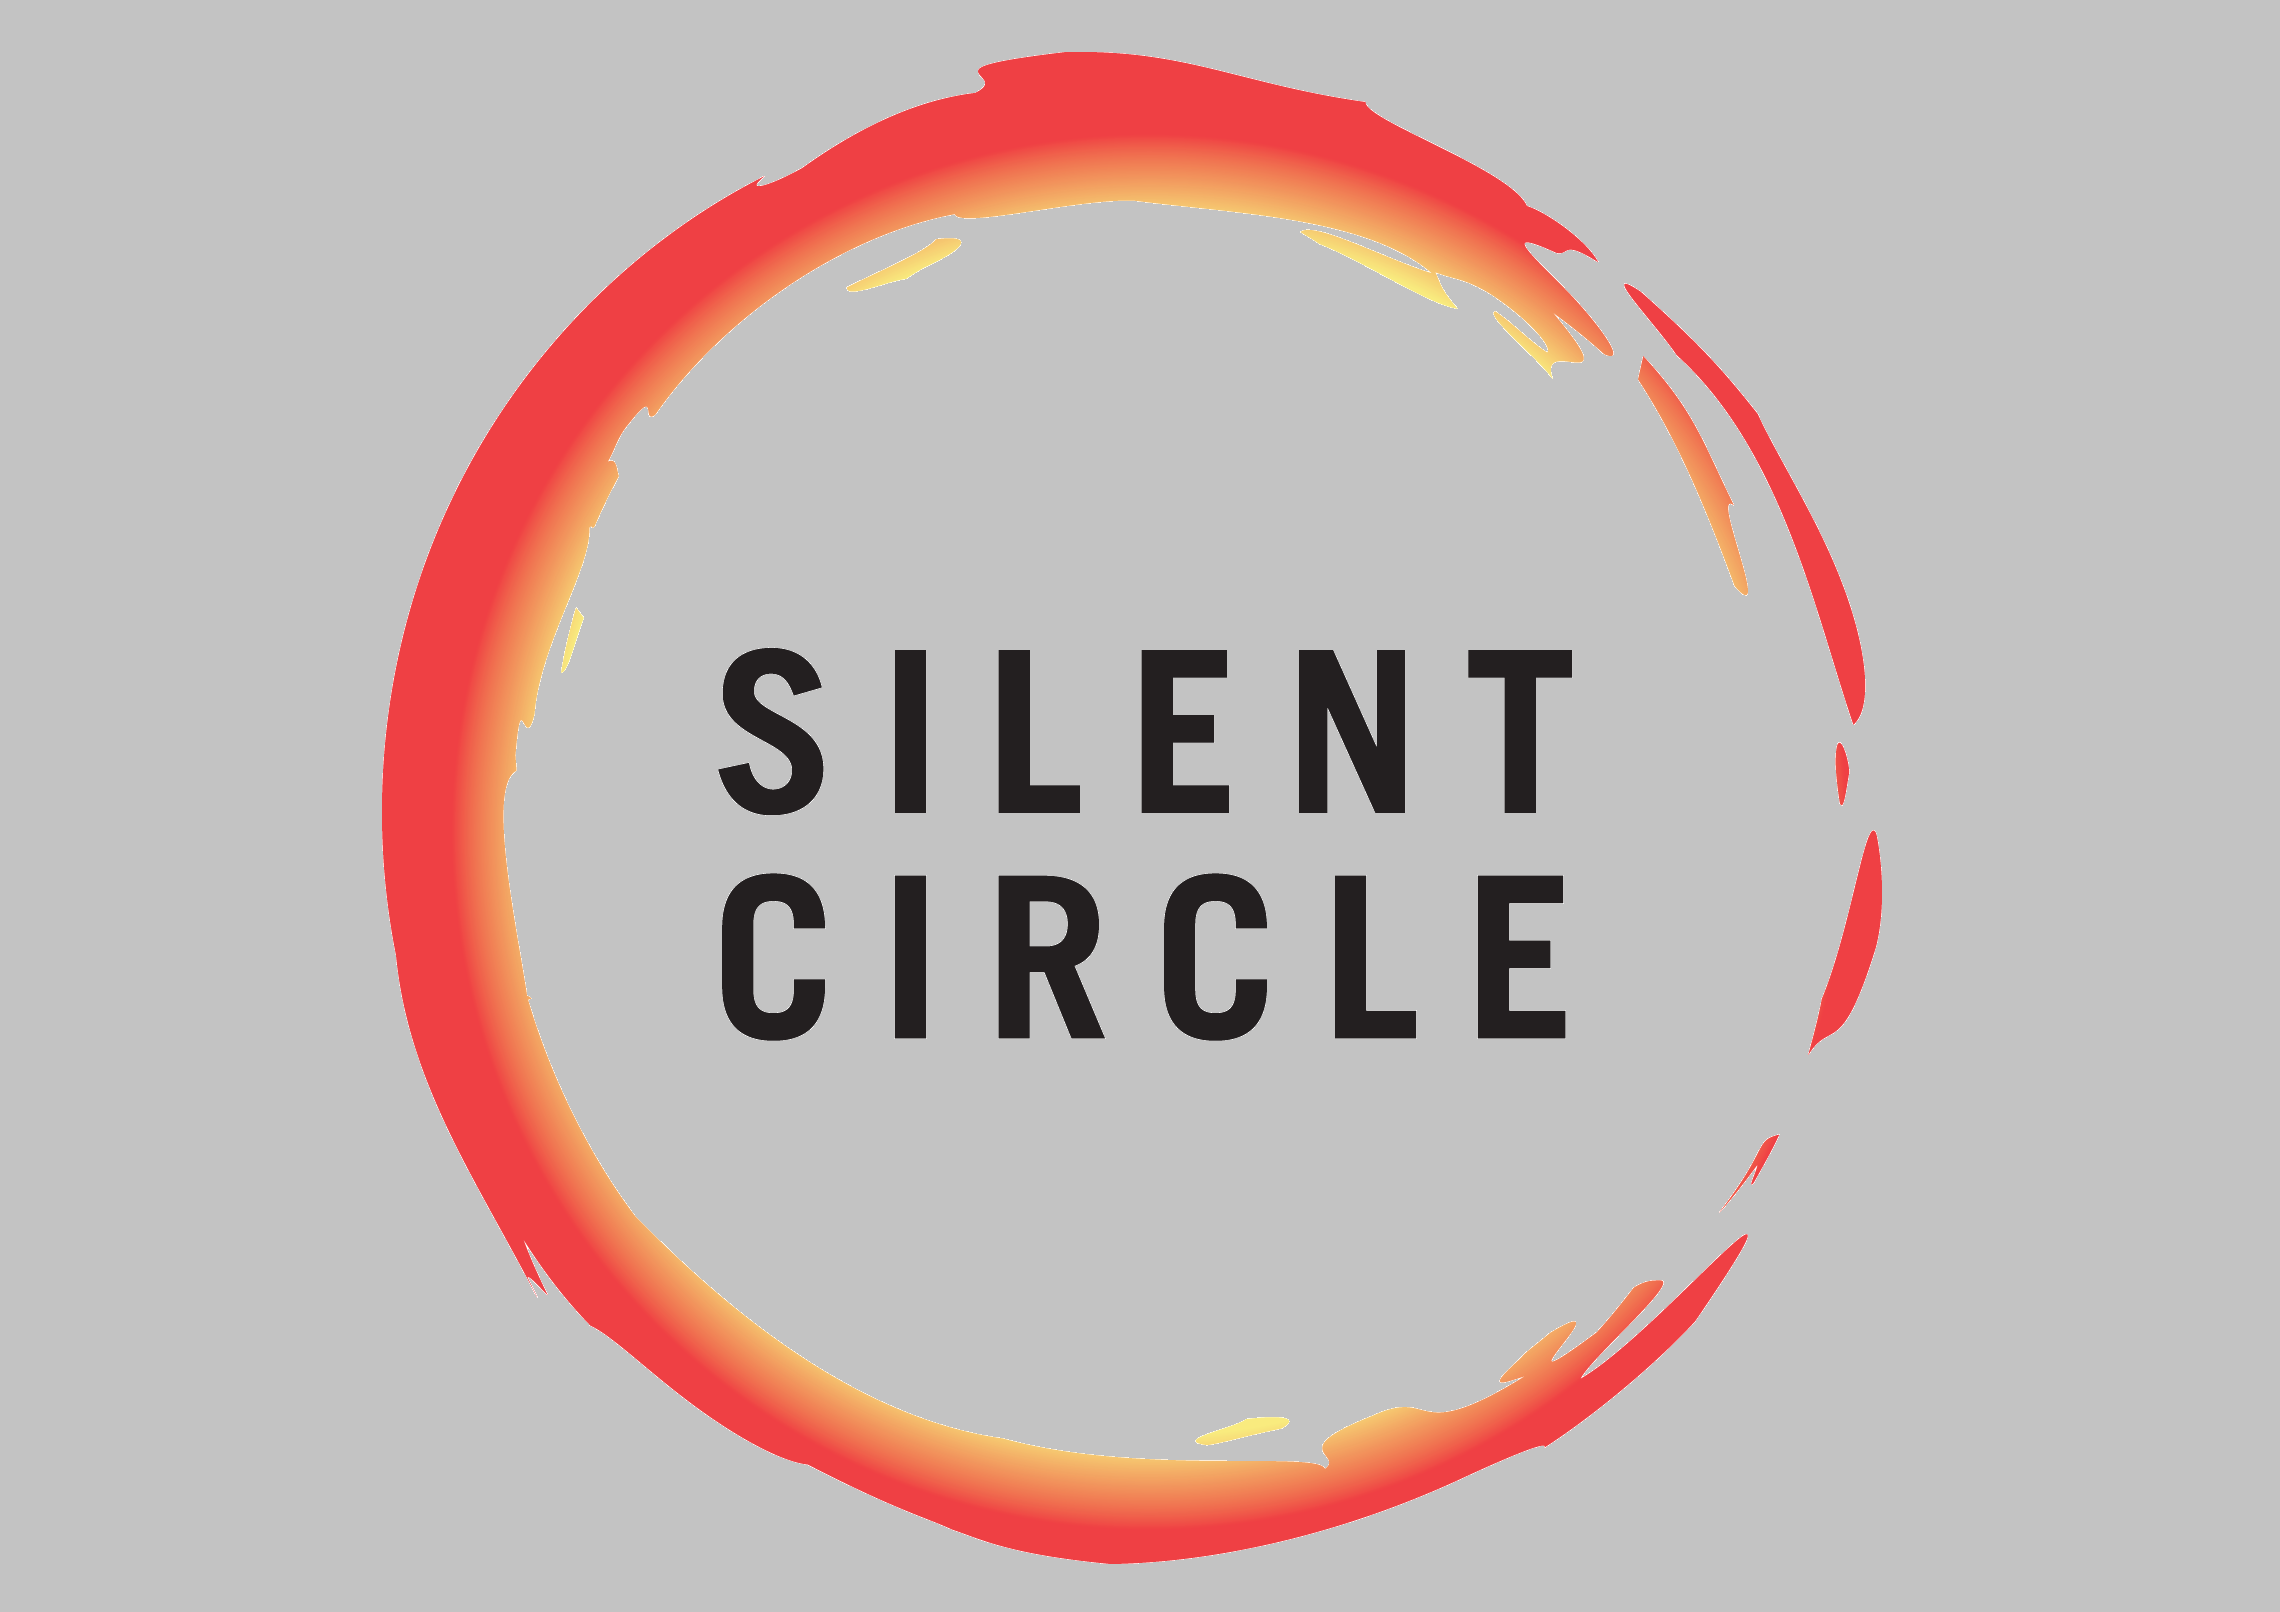 Circle called. Silent circle. Группа Silent circle. Silent circle logo. Silent circle обложка.